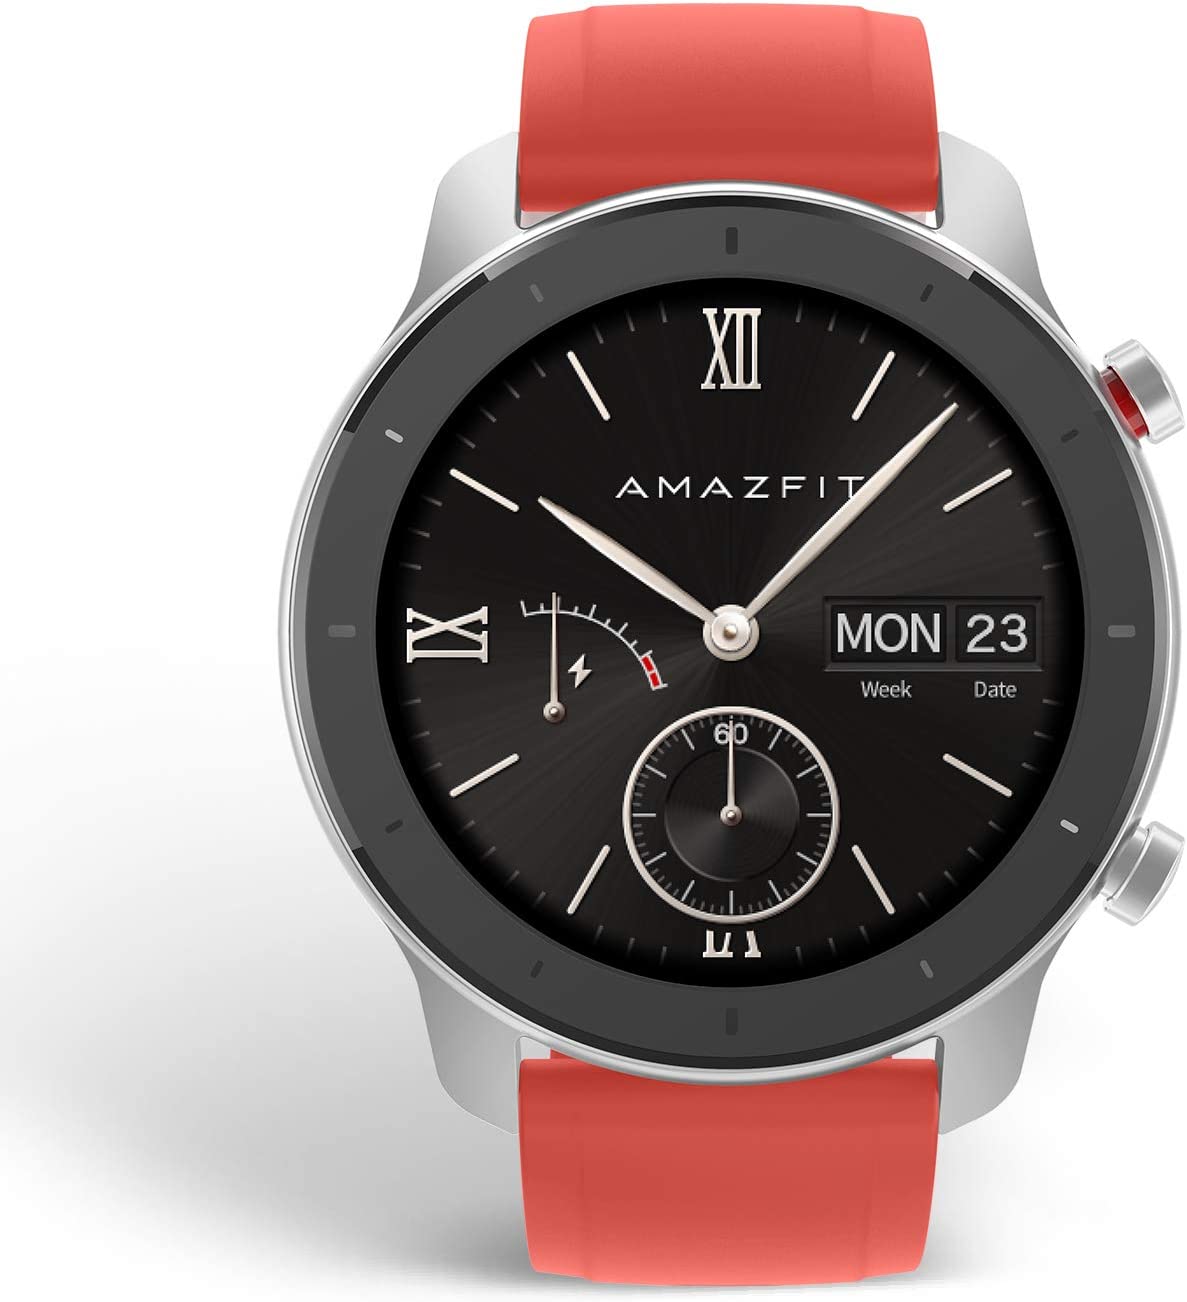 Amazfit GTR 42mm GPS+Glonass GPS Smartwatch (Coral Red) $54.99 + Free Shipping